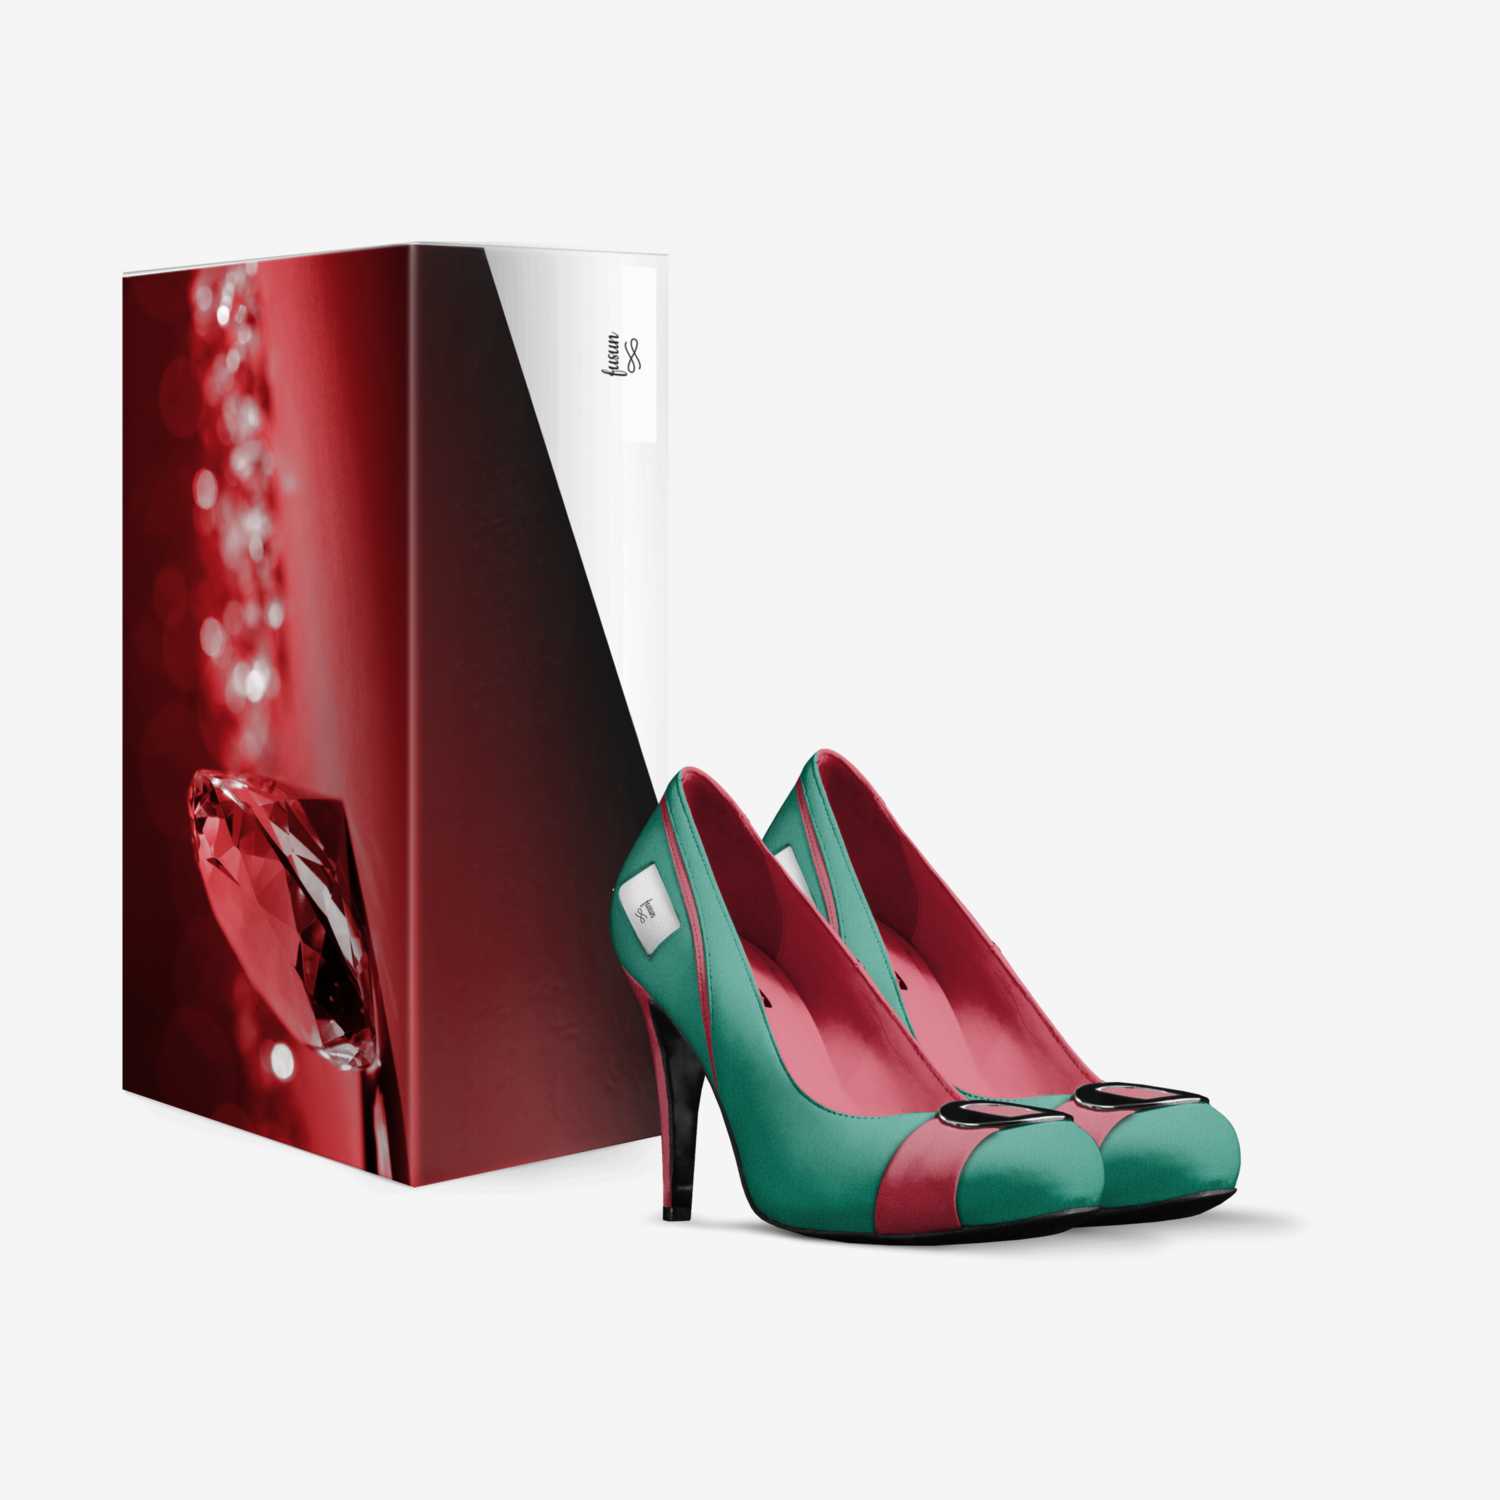 fusun custom made in Italy shoes by Farzana Mir | Box view